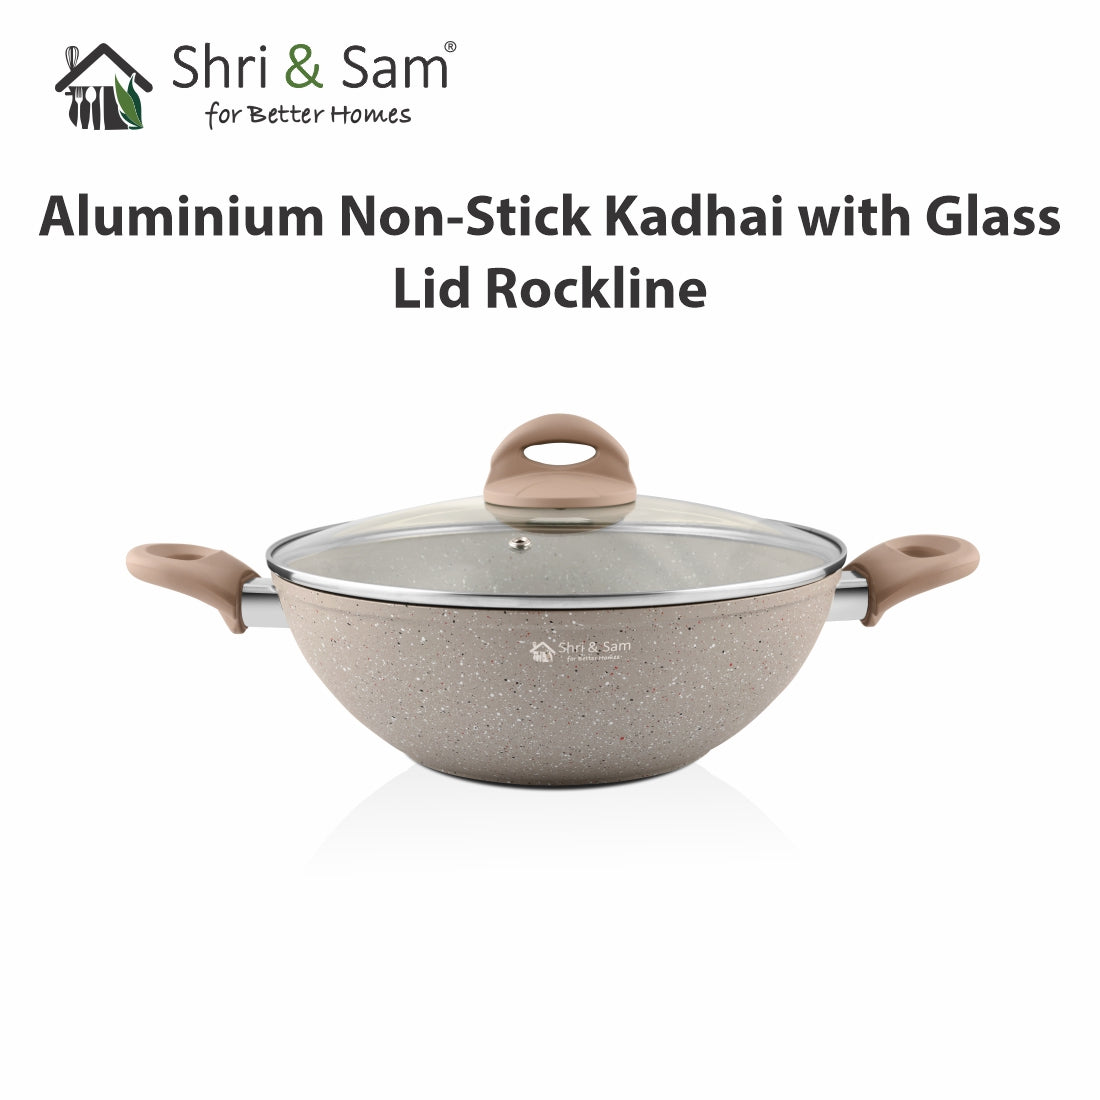 Aluminium Non-Stick Kadhai with Glass Lid Rockline